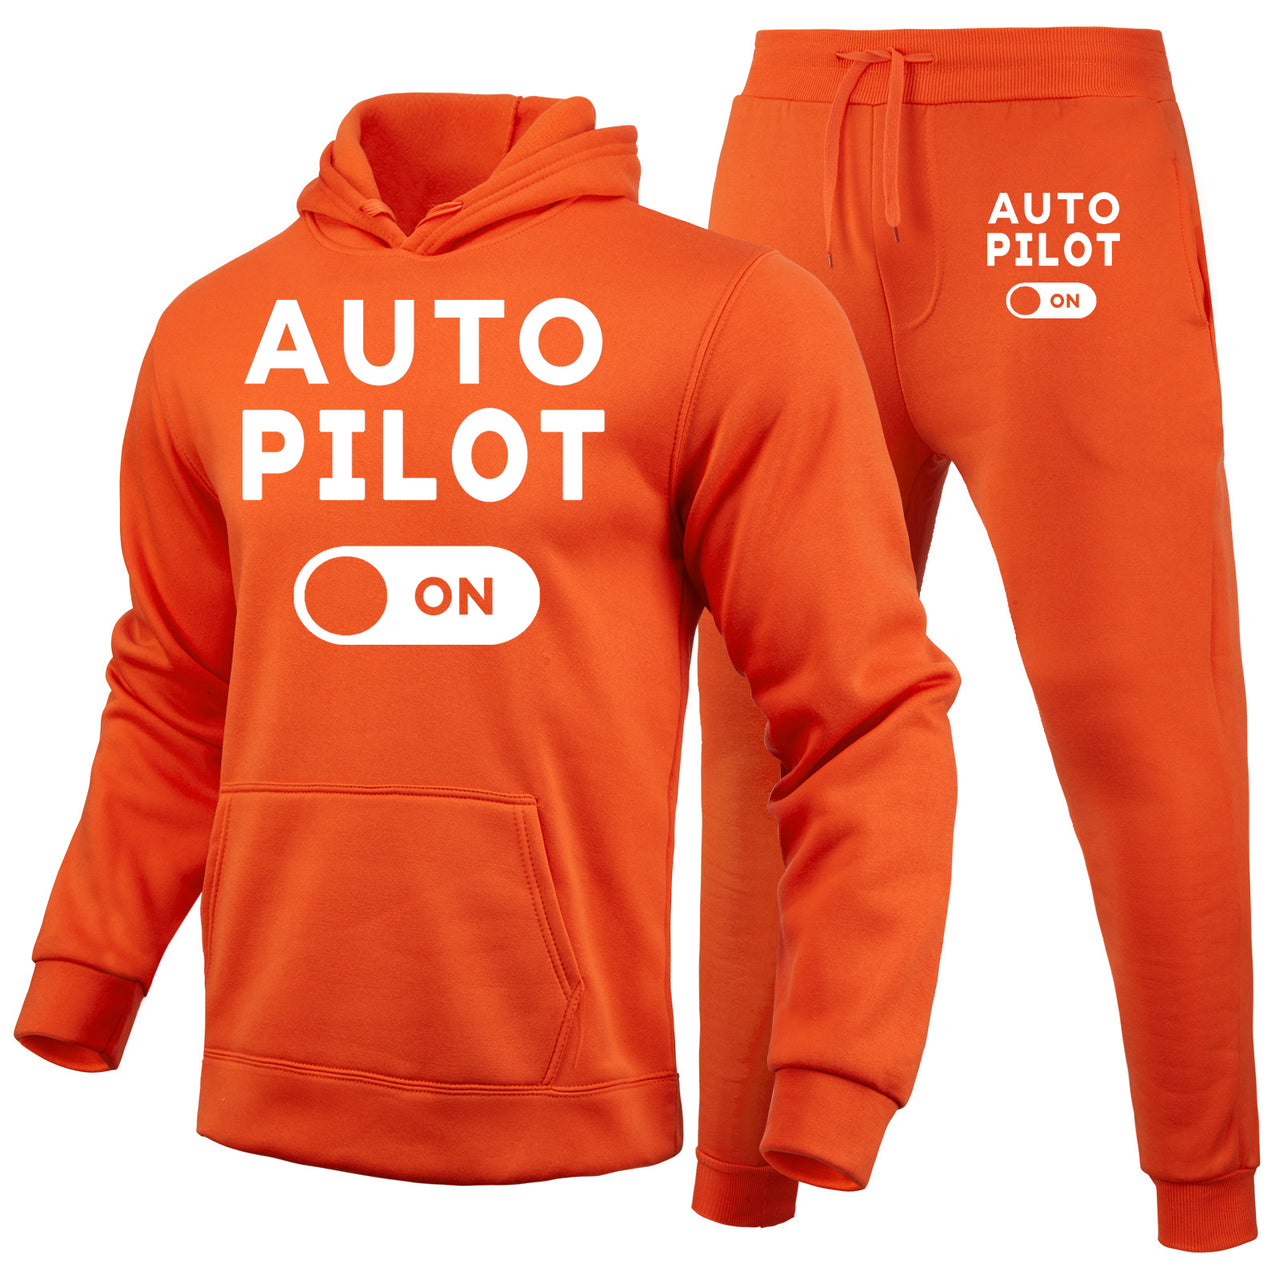 Auto Pilot ON Designed Hoodies & Sweatpants Set